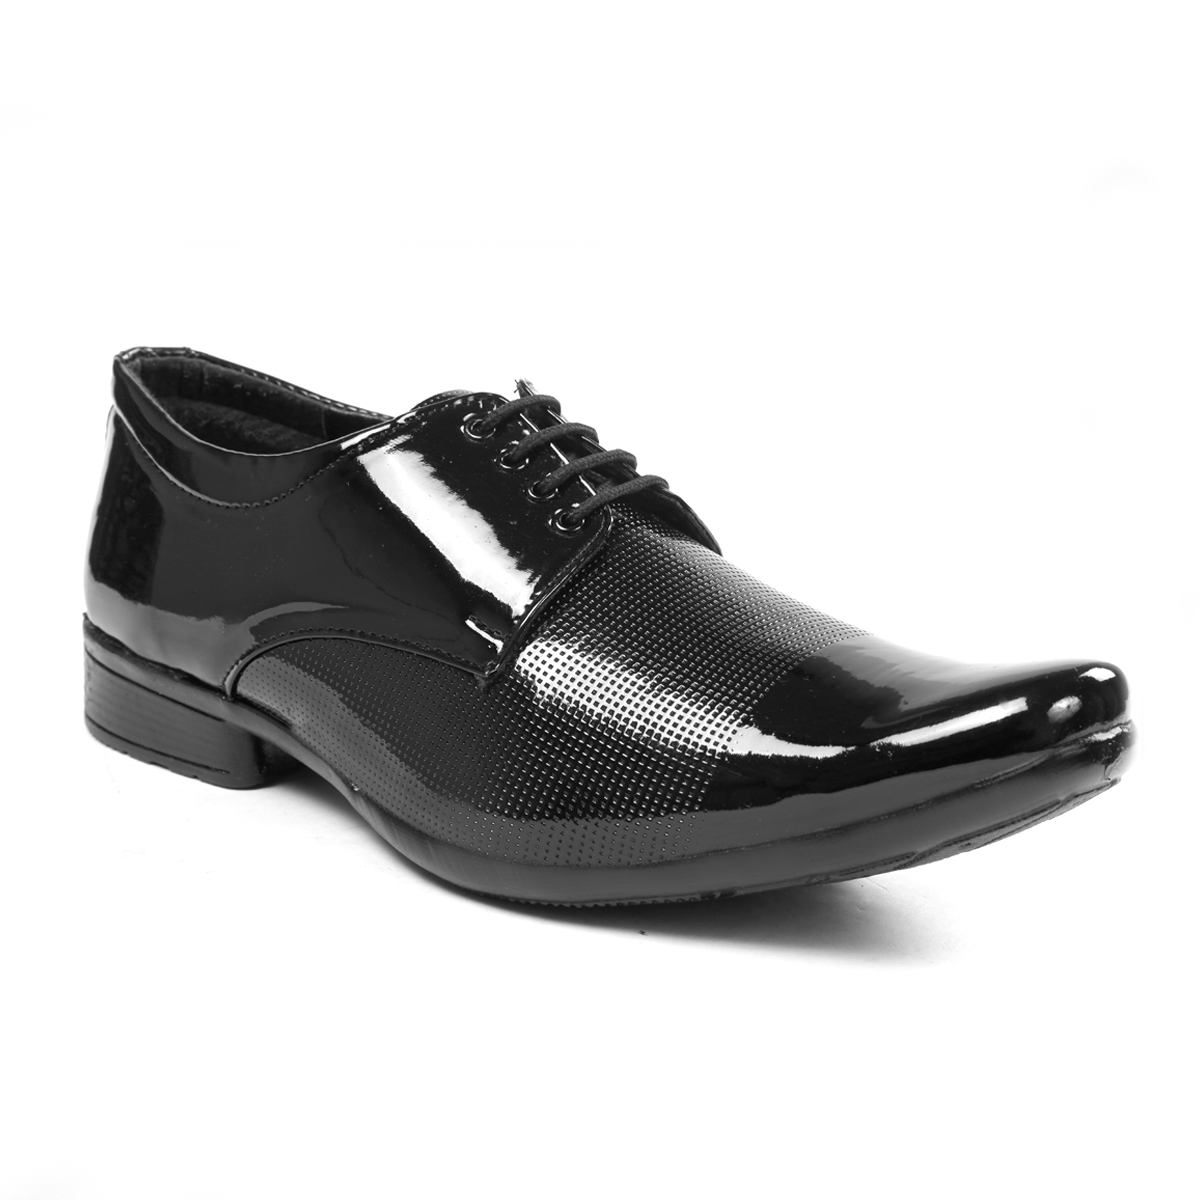 Buy Bucik Men's Black Synthetic Leather Derby Formal Shoes Online ...